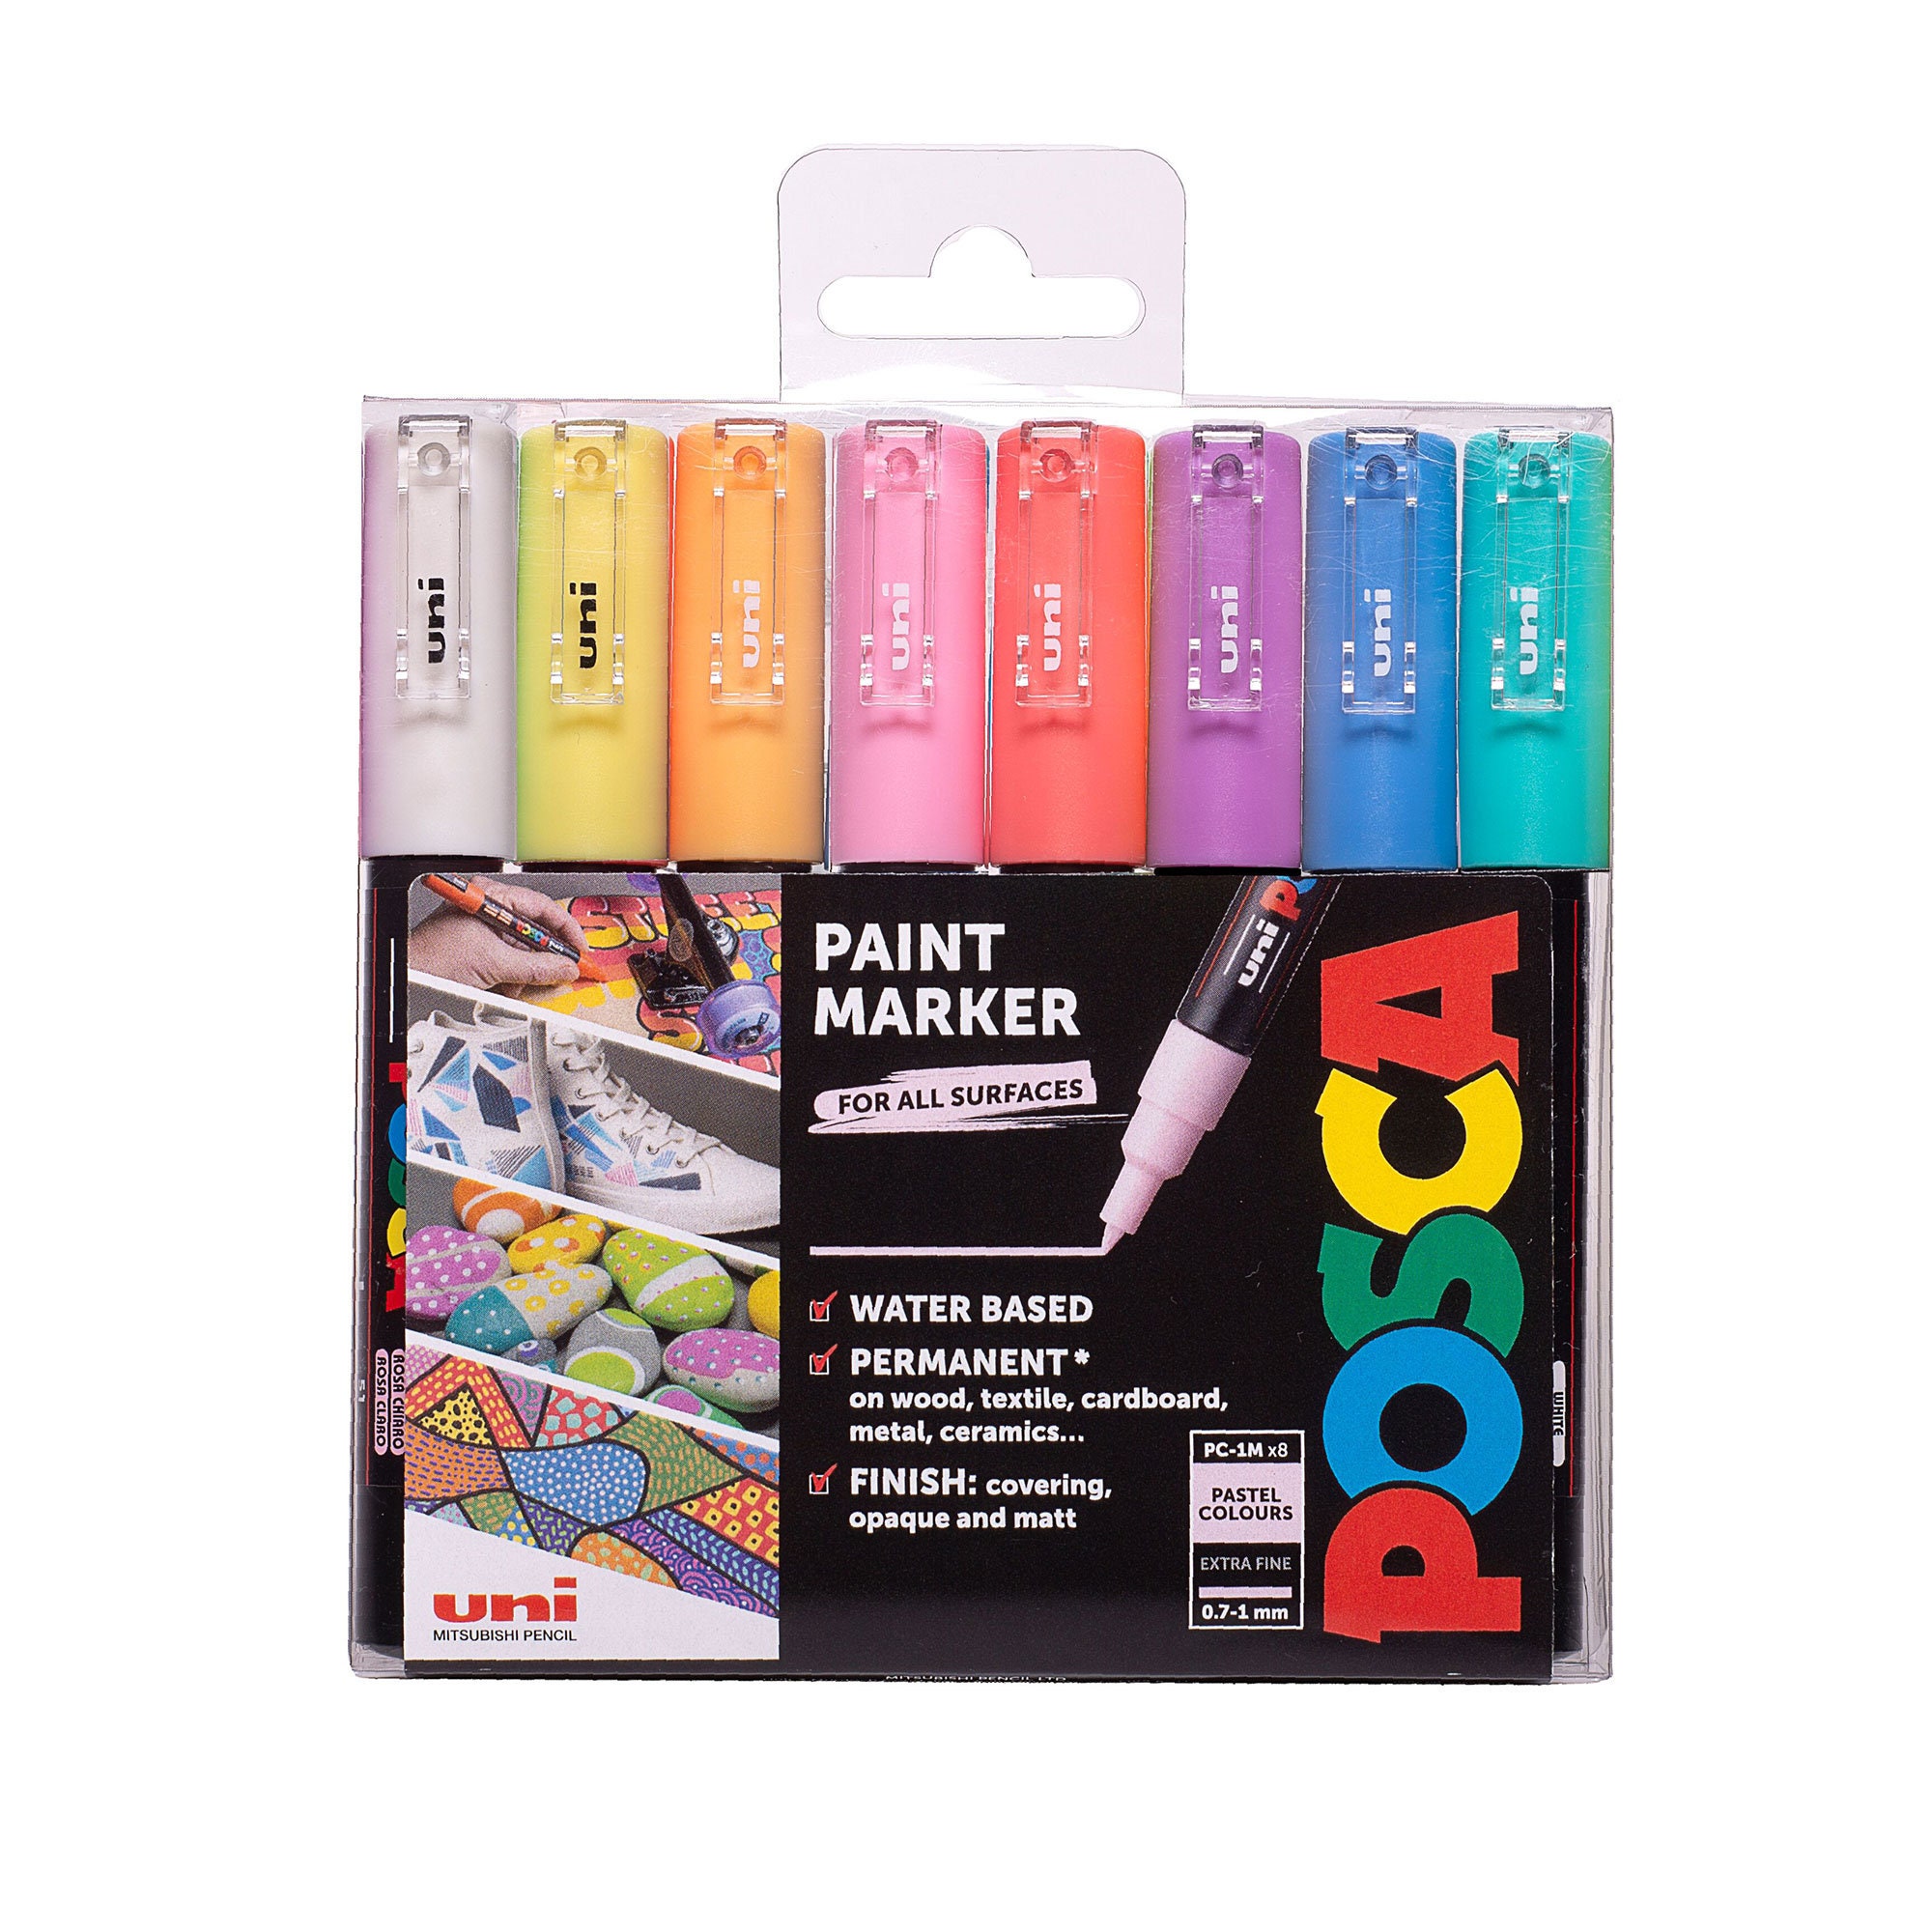 POSCA Pc-1mr 18 Pen Set - Featuring 2 Limited Edition Pastel